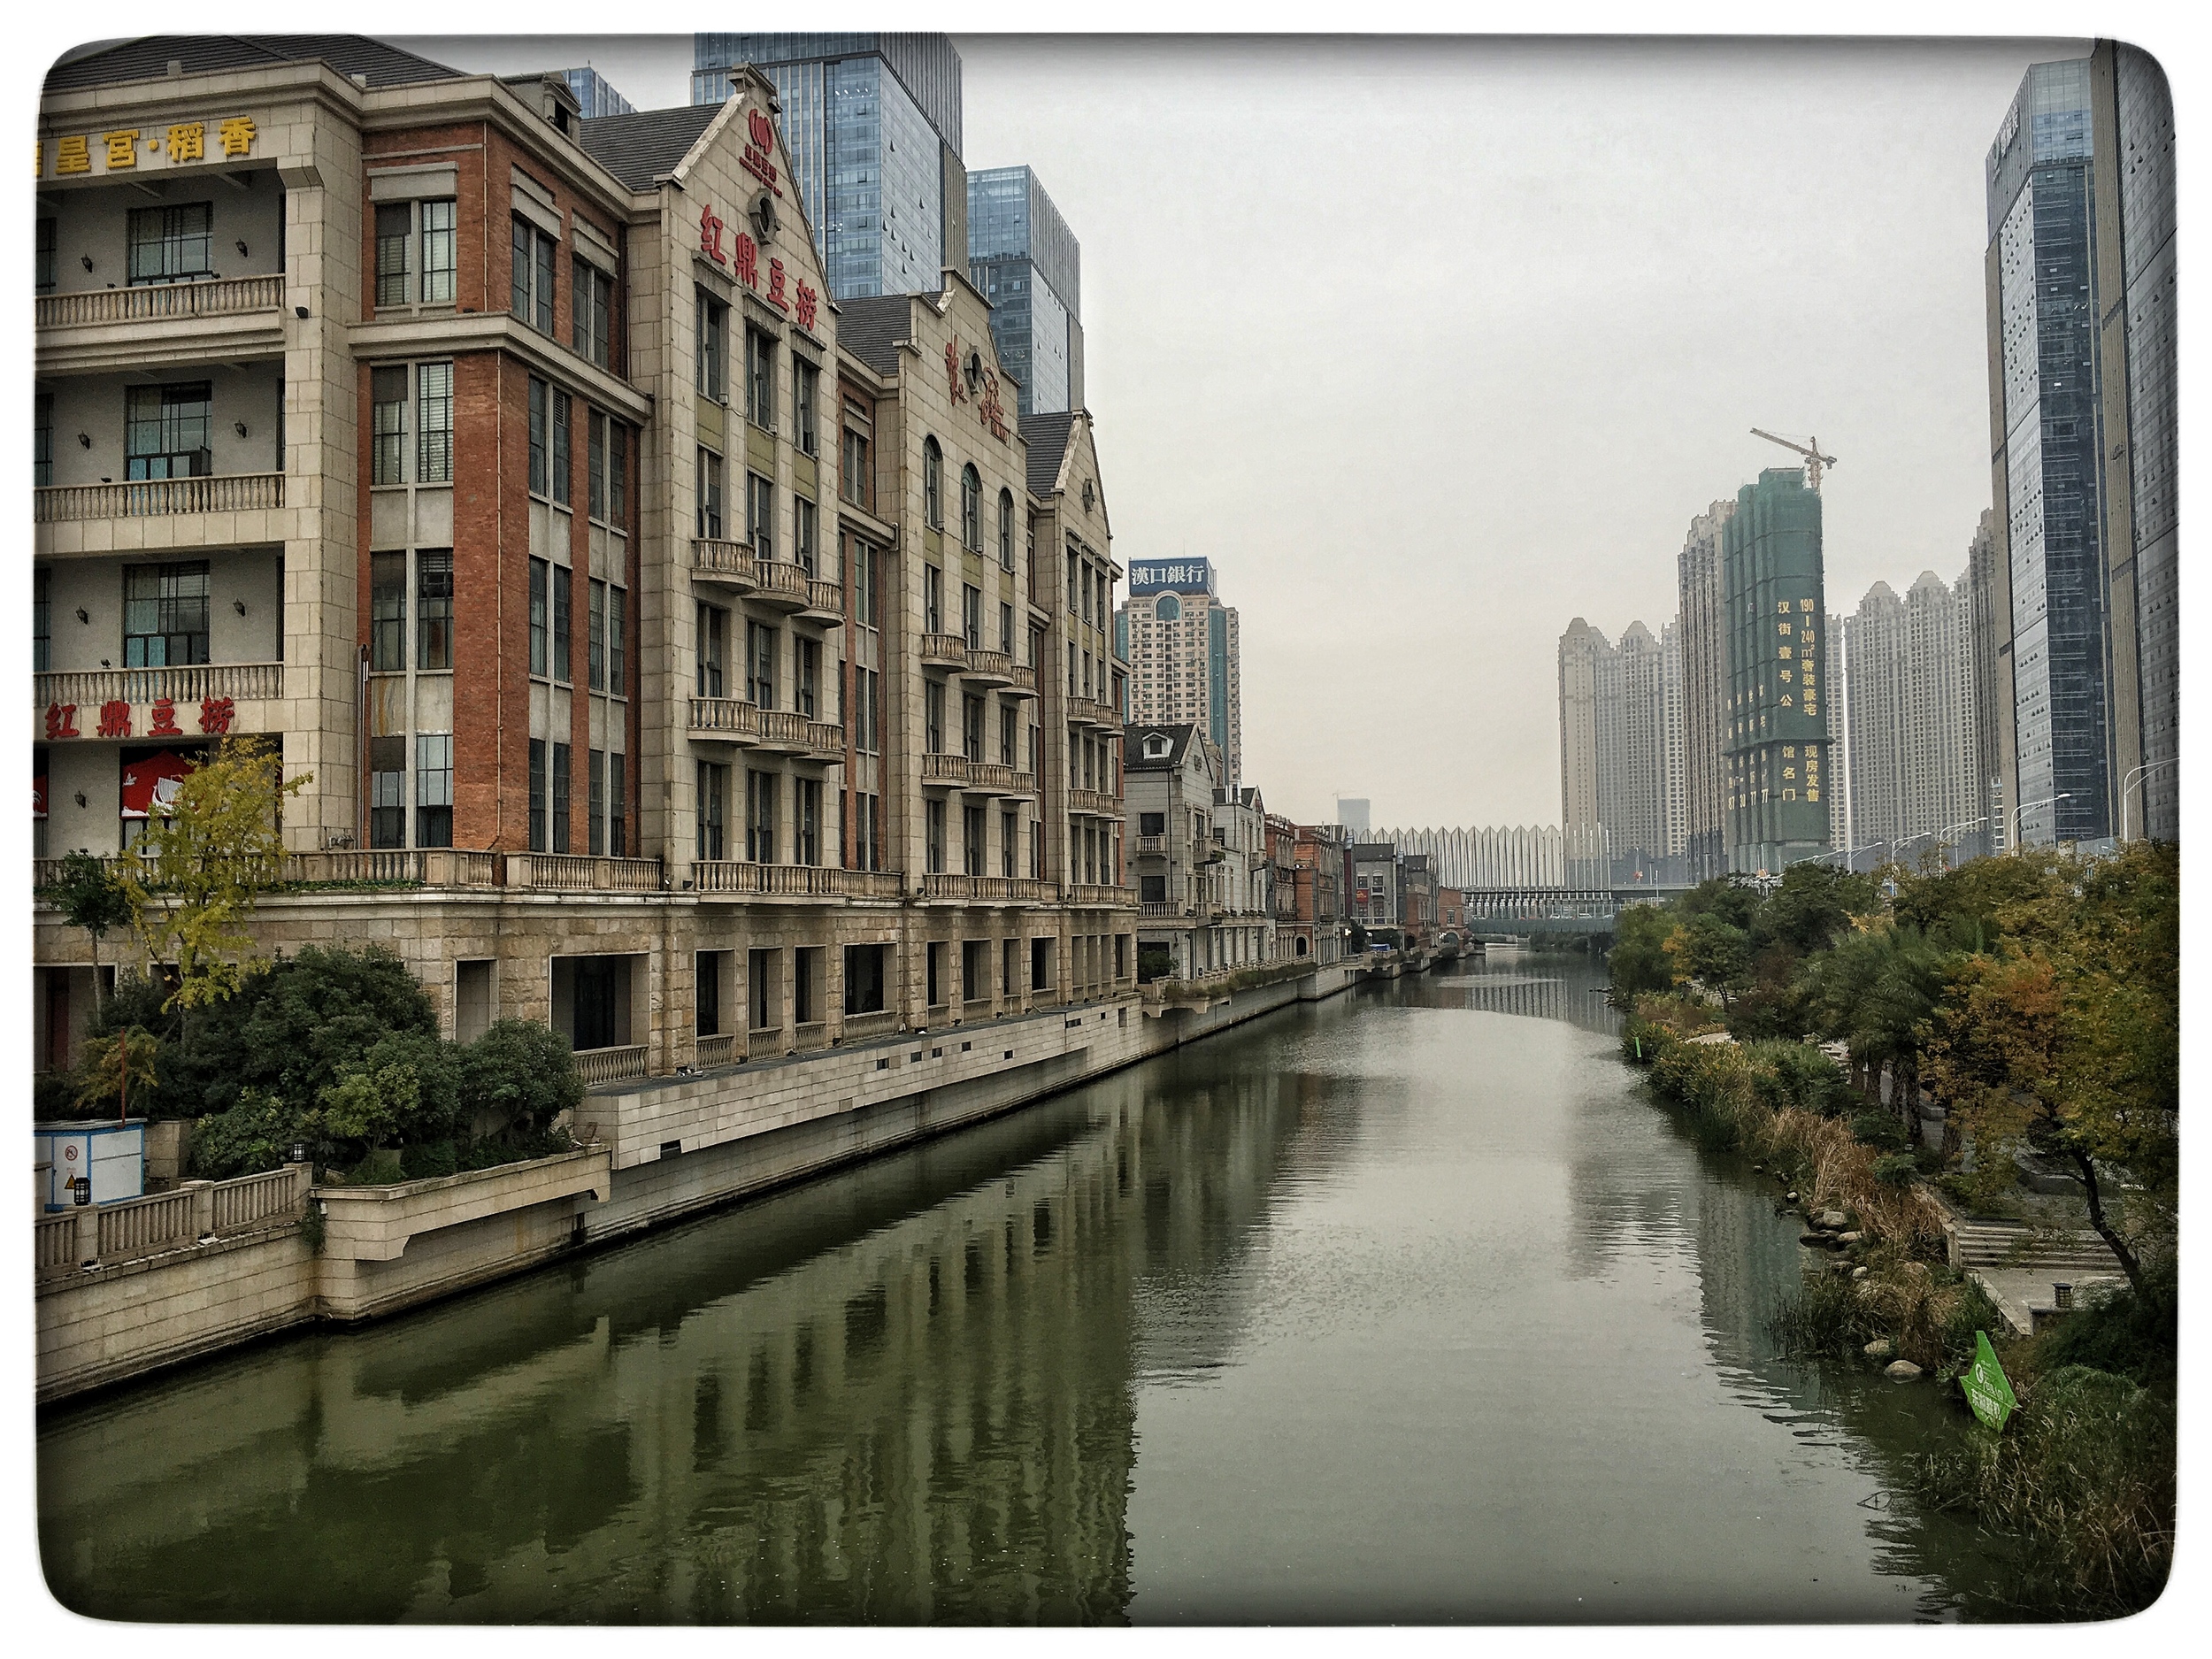  Han Street canal, Wuhan 